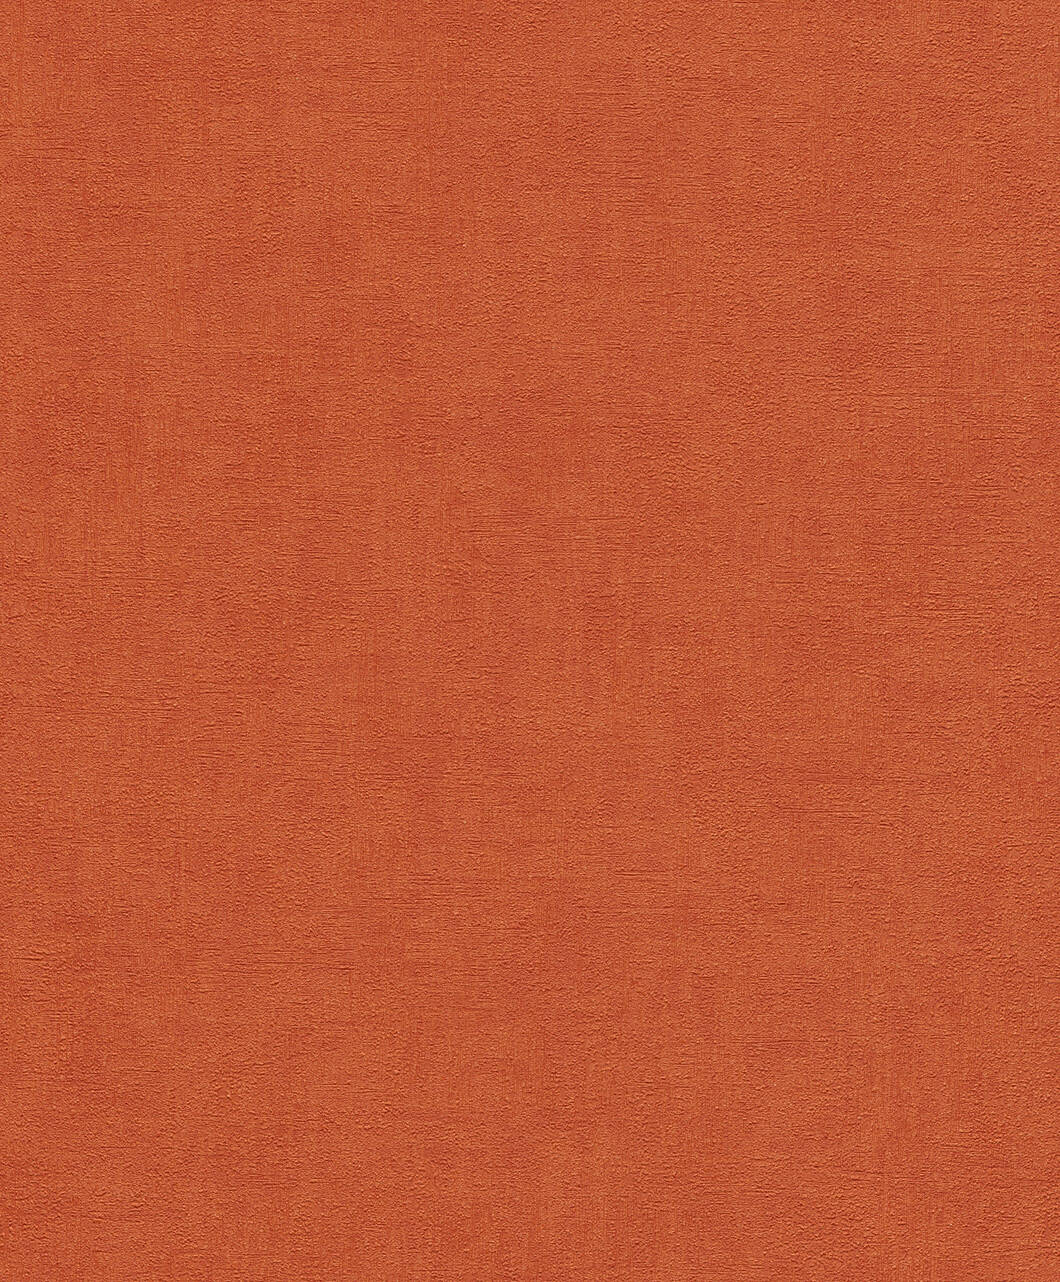 Vliestapete mit Putzoptik in Orange-Rot 489958